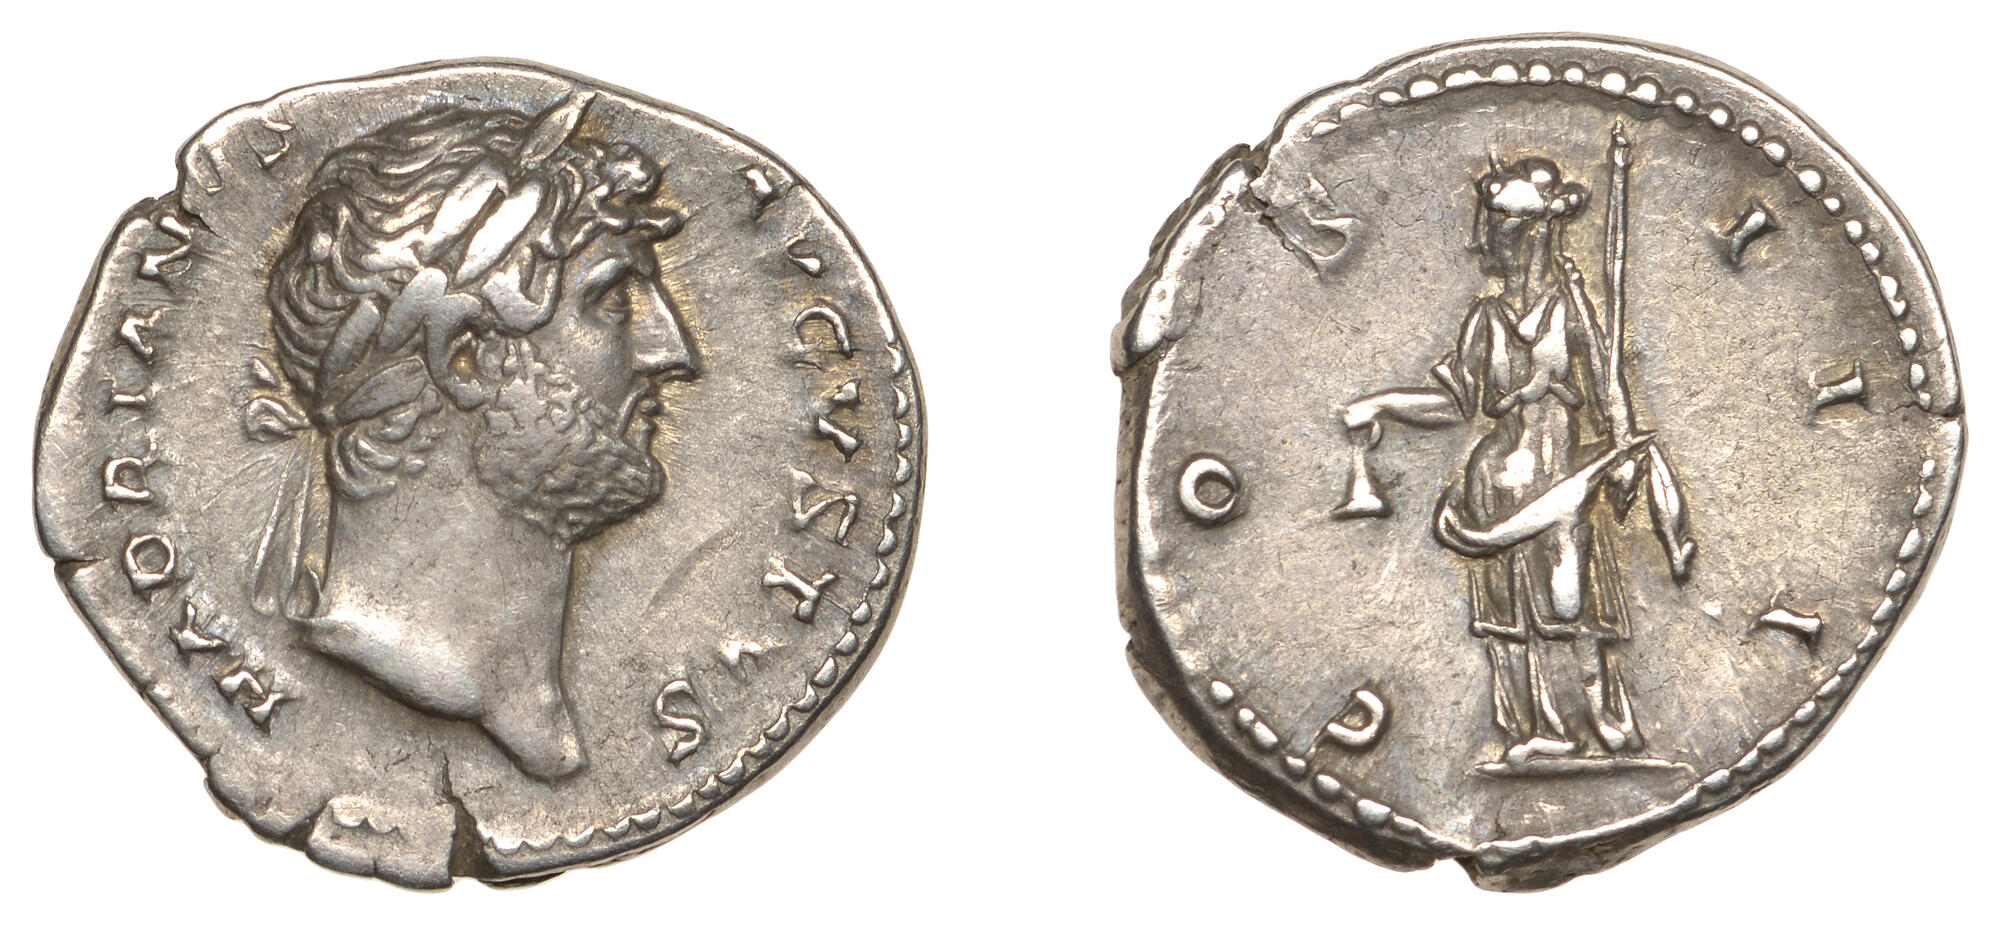 SALE／94%OFF】 アンティークコイン コイン 金貨 銀貨 送料無料 Ancient Roman Hadrian AR Denarius Coin  117-138 AD Certified NGC VF